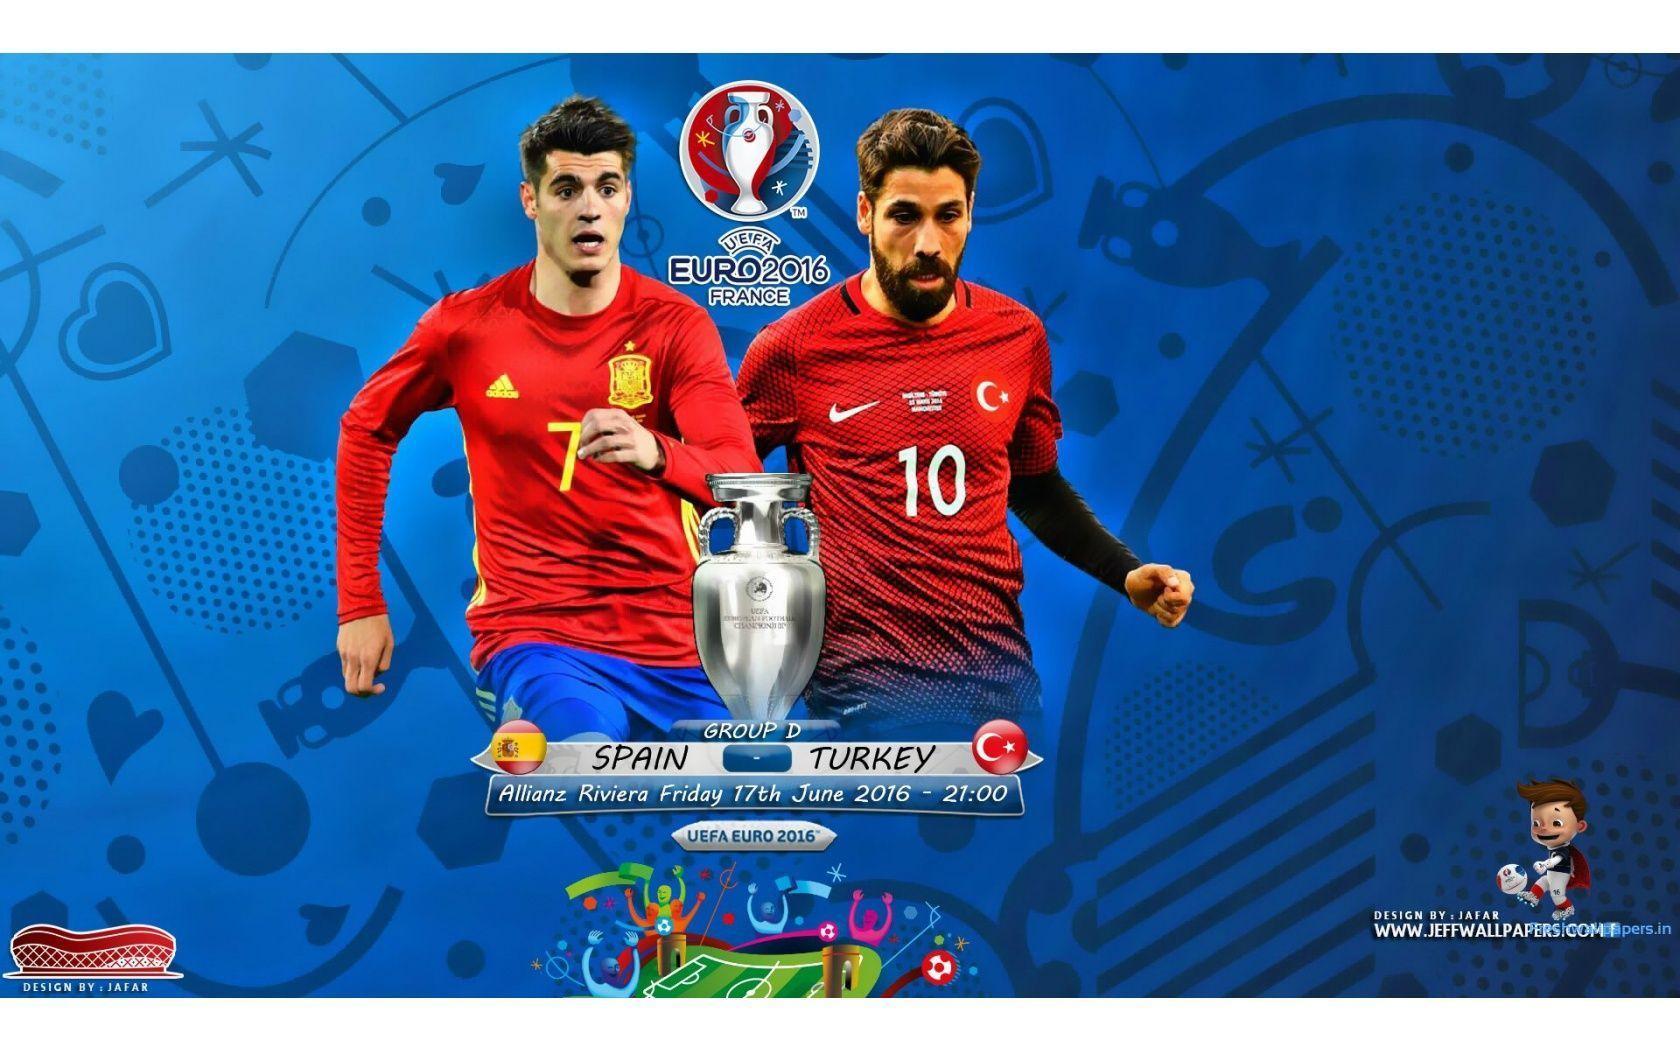 Spain Turkey Euro 2016 wallpapers